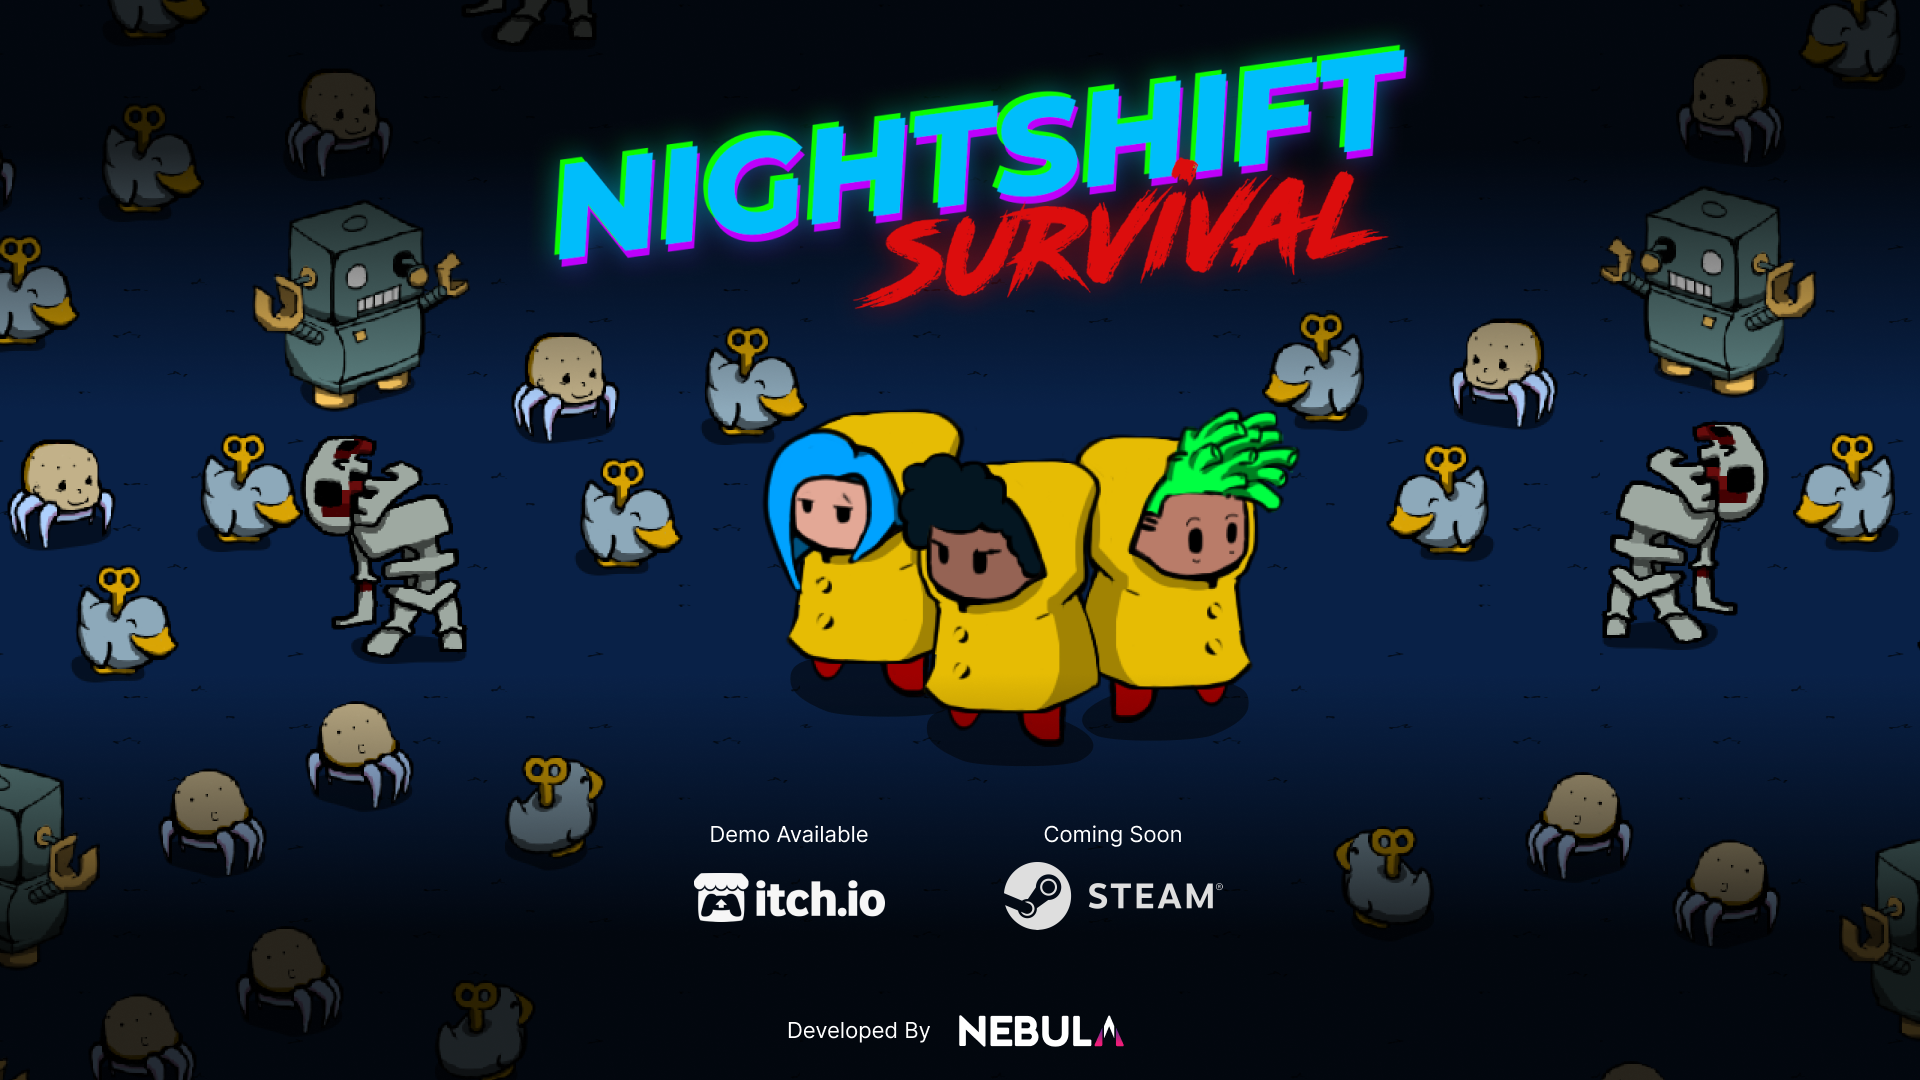 Last Night Shift on Steam